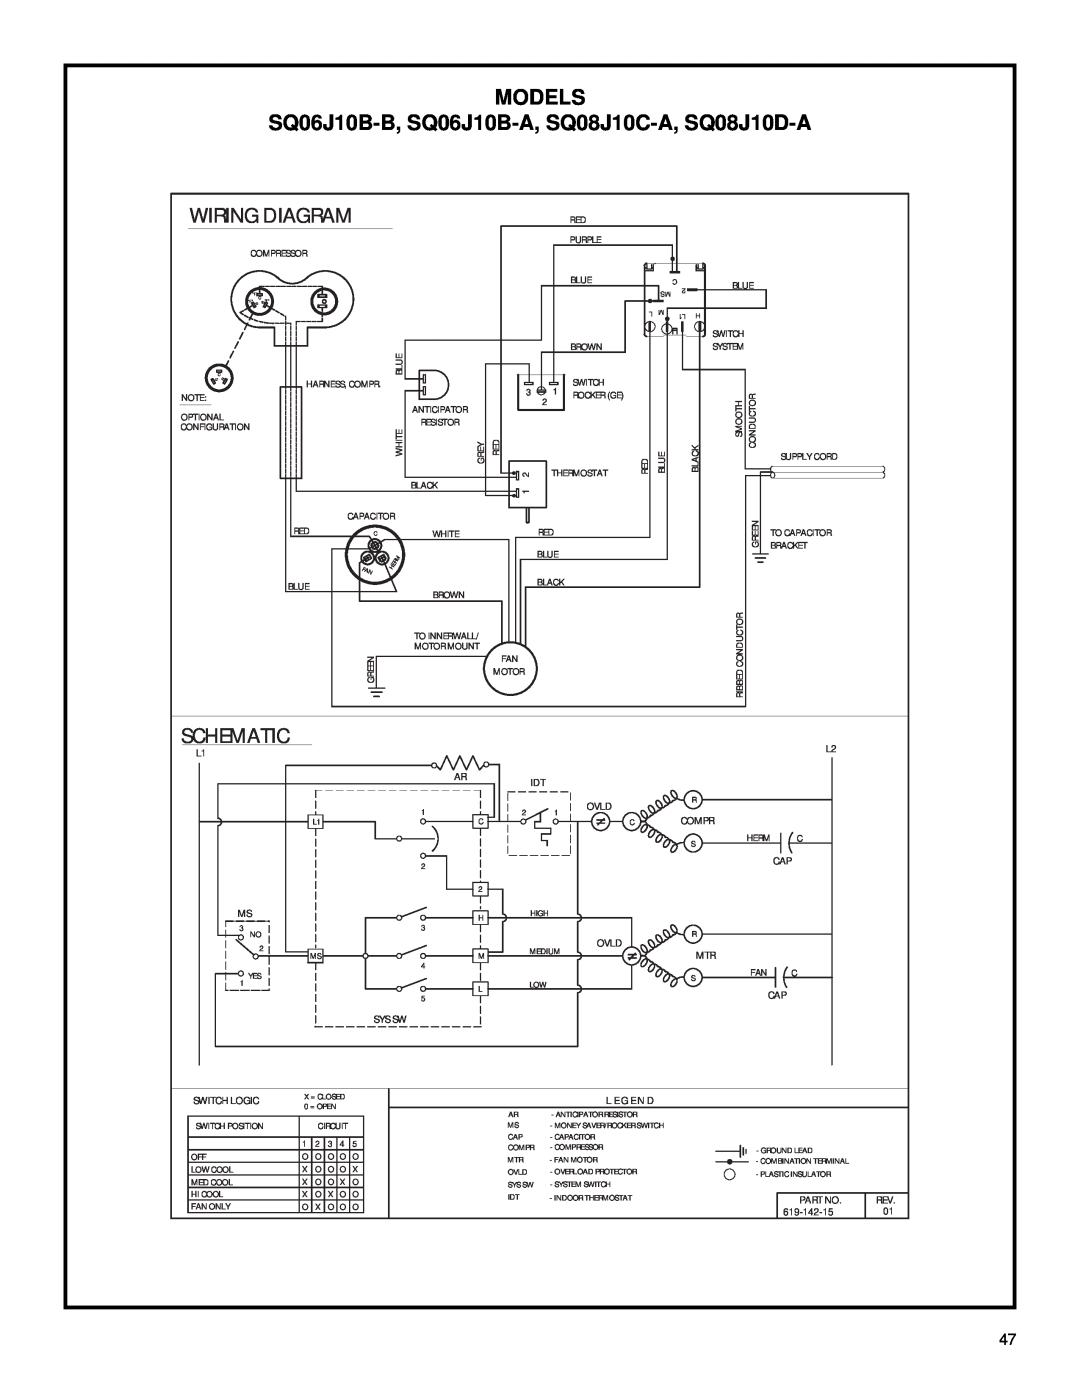 Friedrich racservmn service manual Models, SQ06J10B-B, SQ06J10B-A, SQ08J10C-A, SQ08J10D-A, Wiring Diagram, Schematic 